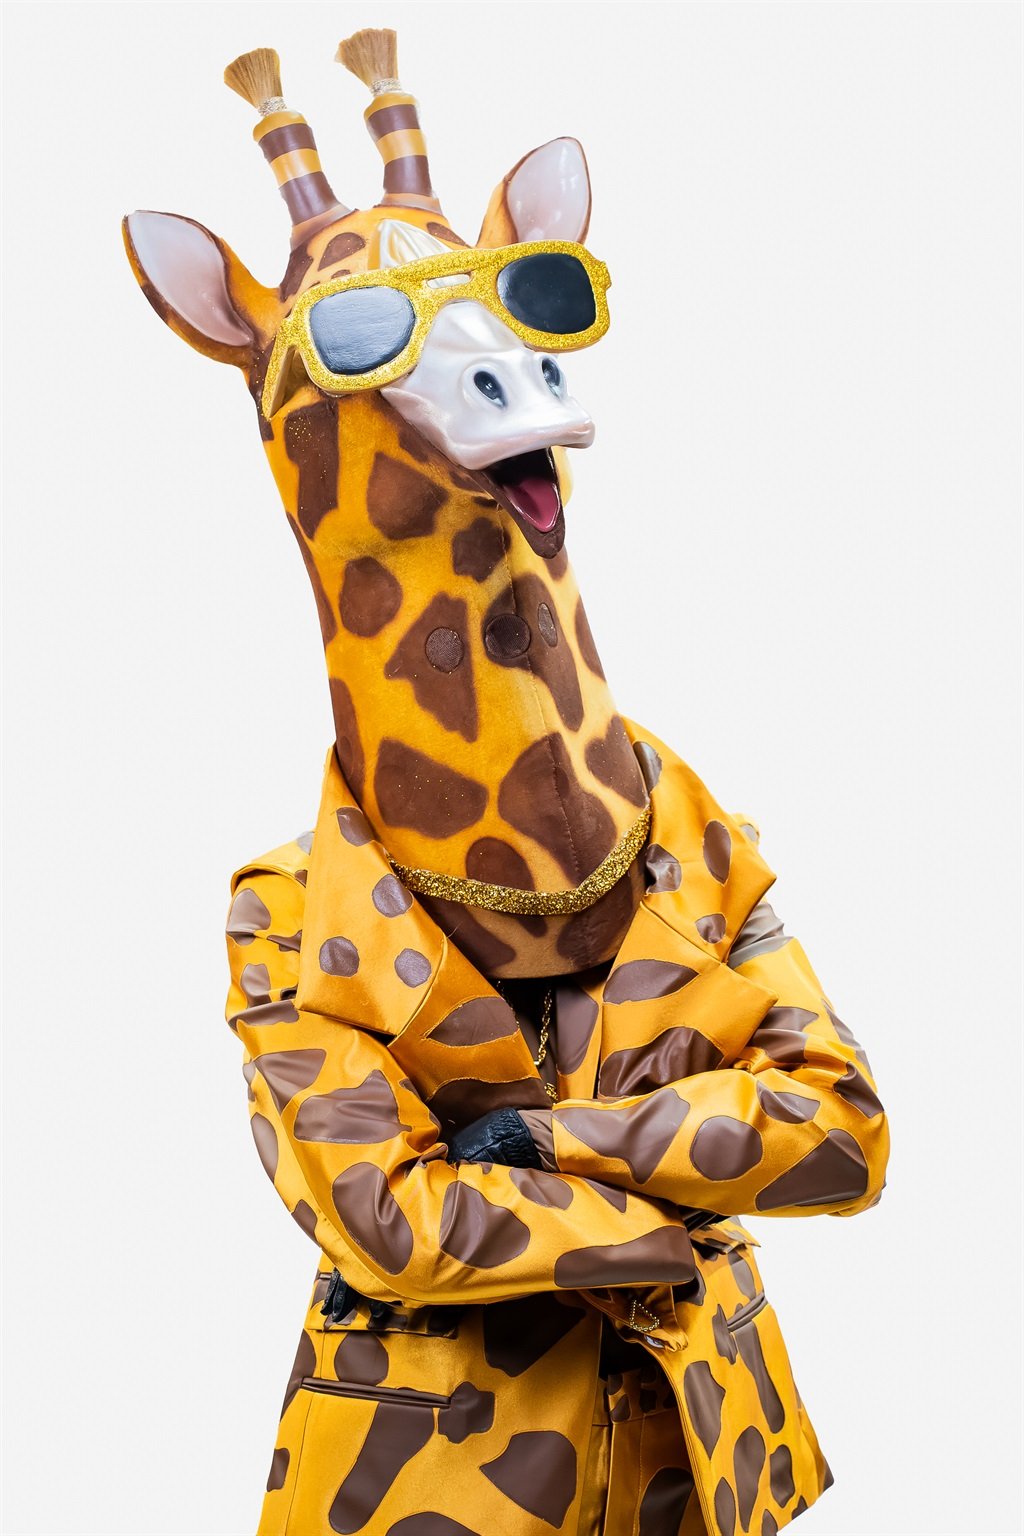 Giraffe (Supplied)